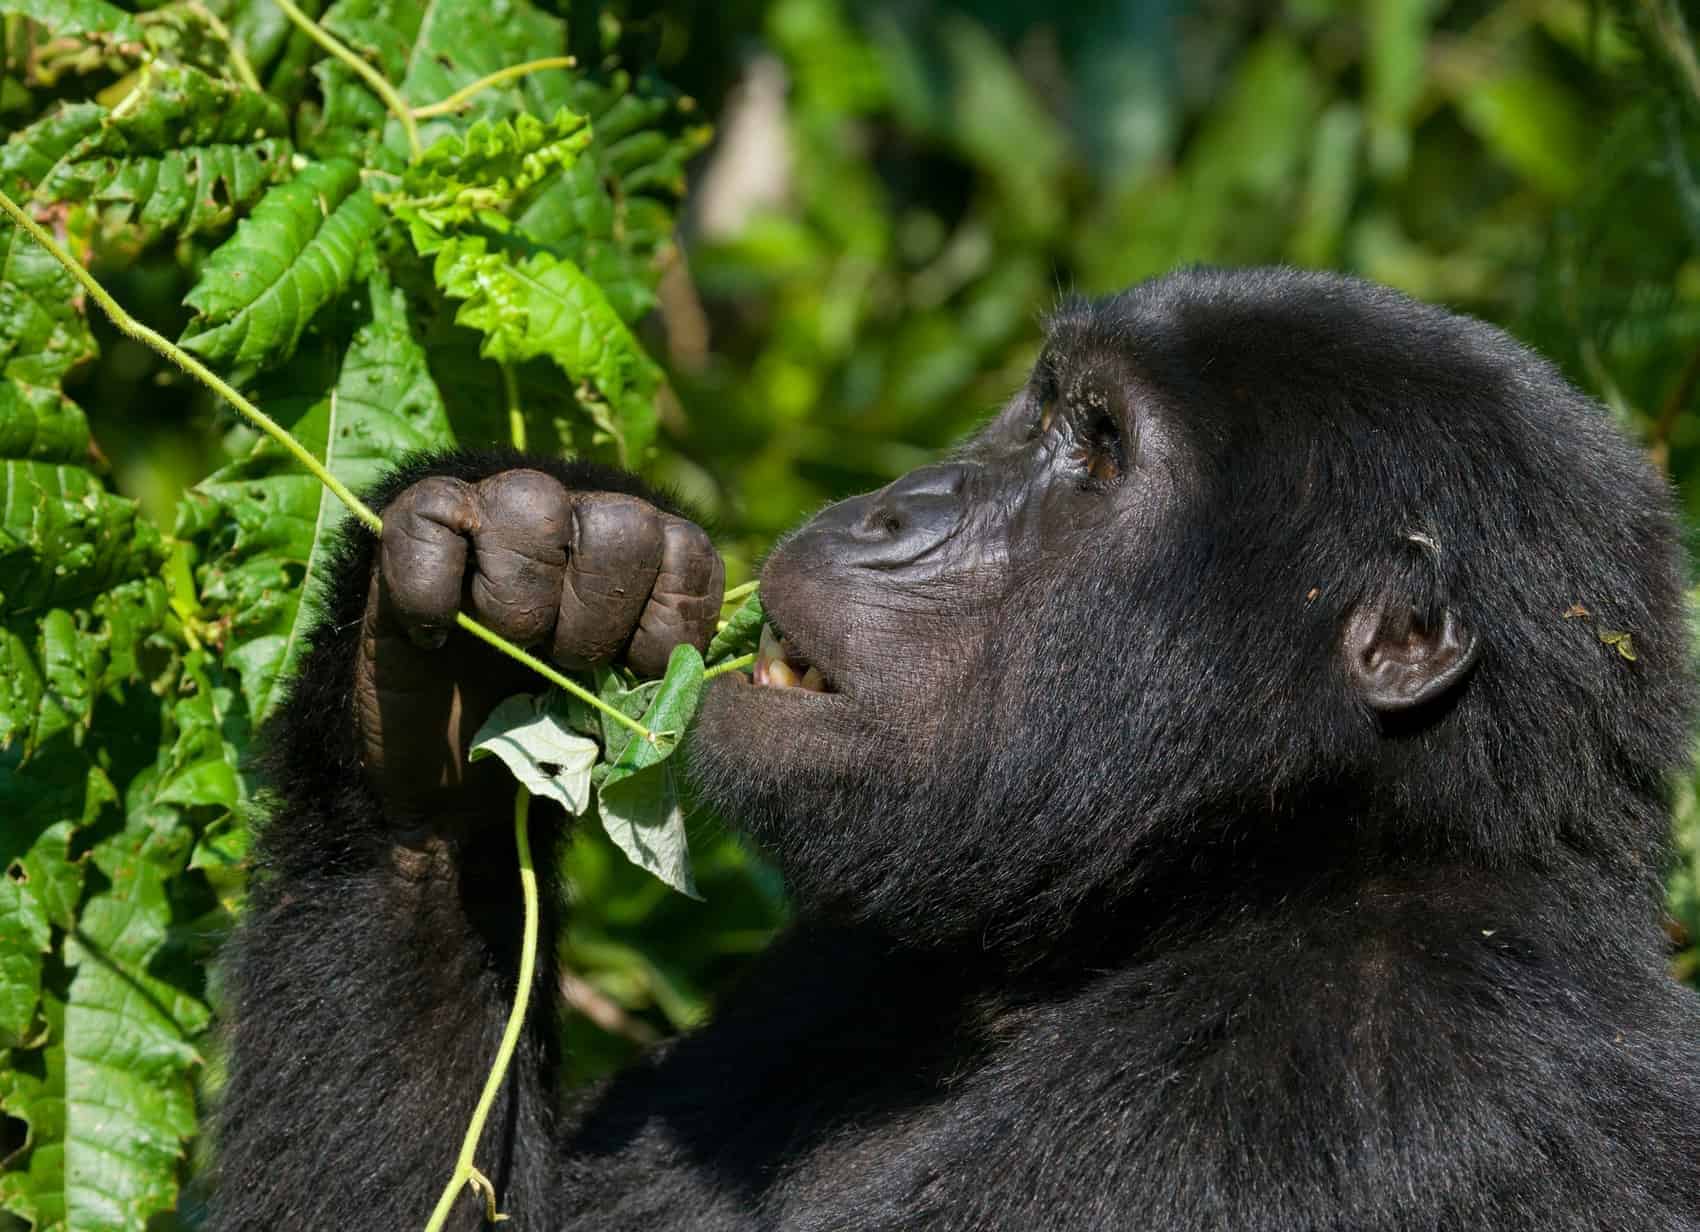 Mountain gorilla eating plants. Uganda. Bwindi Impenetrable Forest National Park. An excellent illustration.